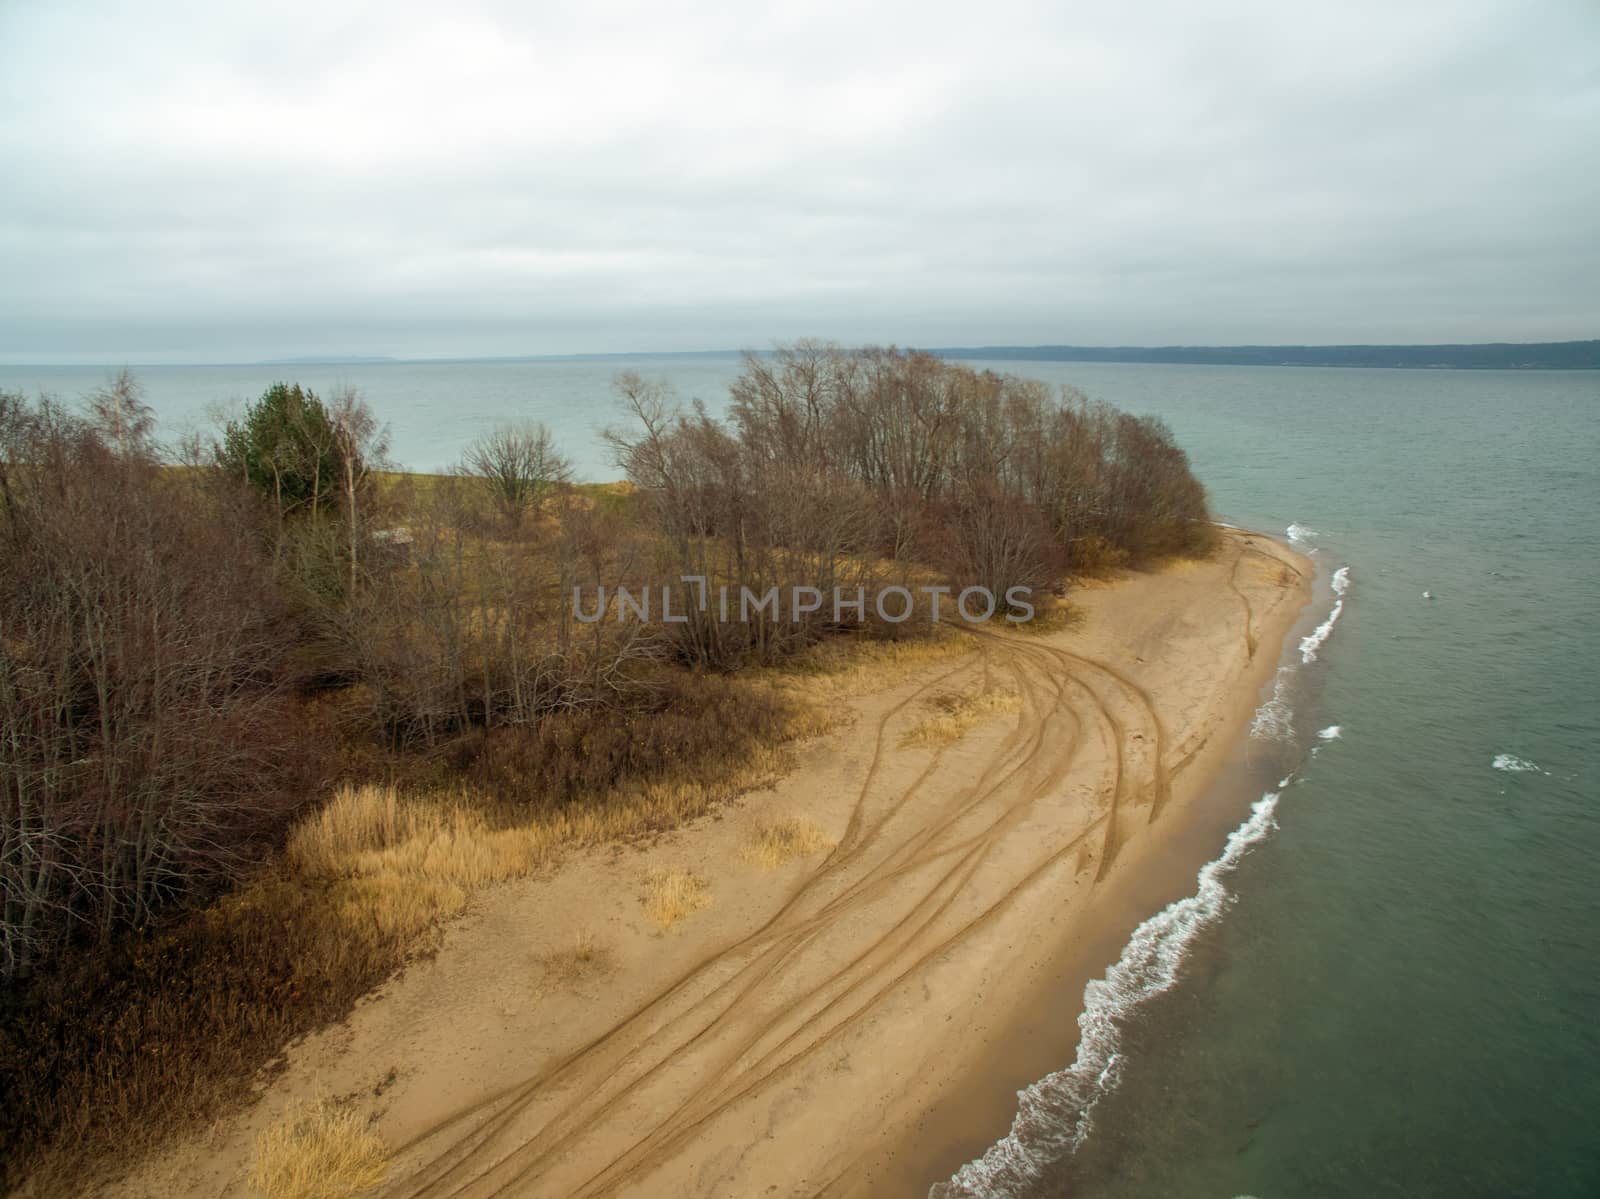 Sandy beach with shrubbery